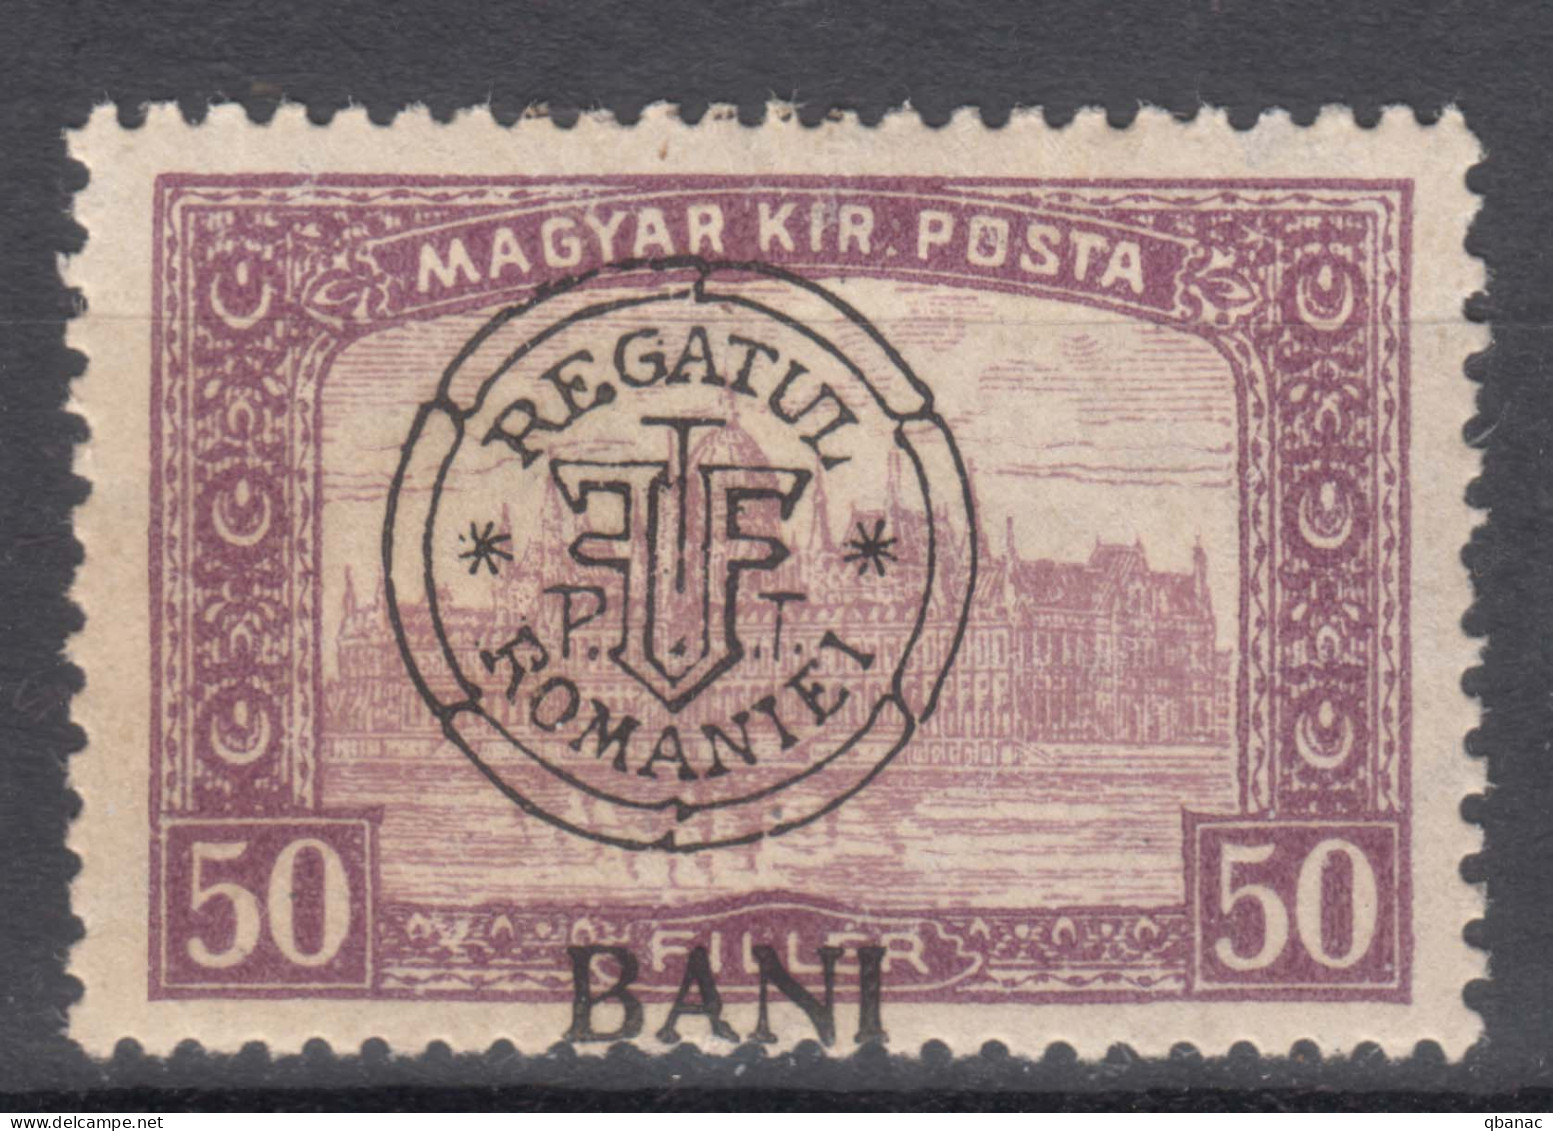 Romania Overprint On Hungary Stamps Occupation Transylvania 1919 Mi#37 I Mint Hinged - Transilvania